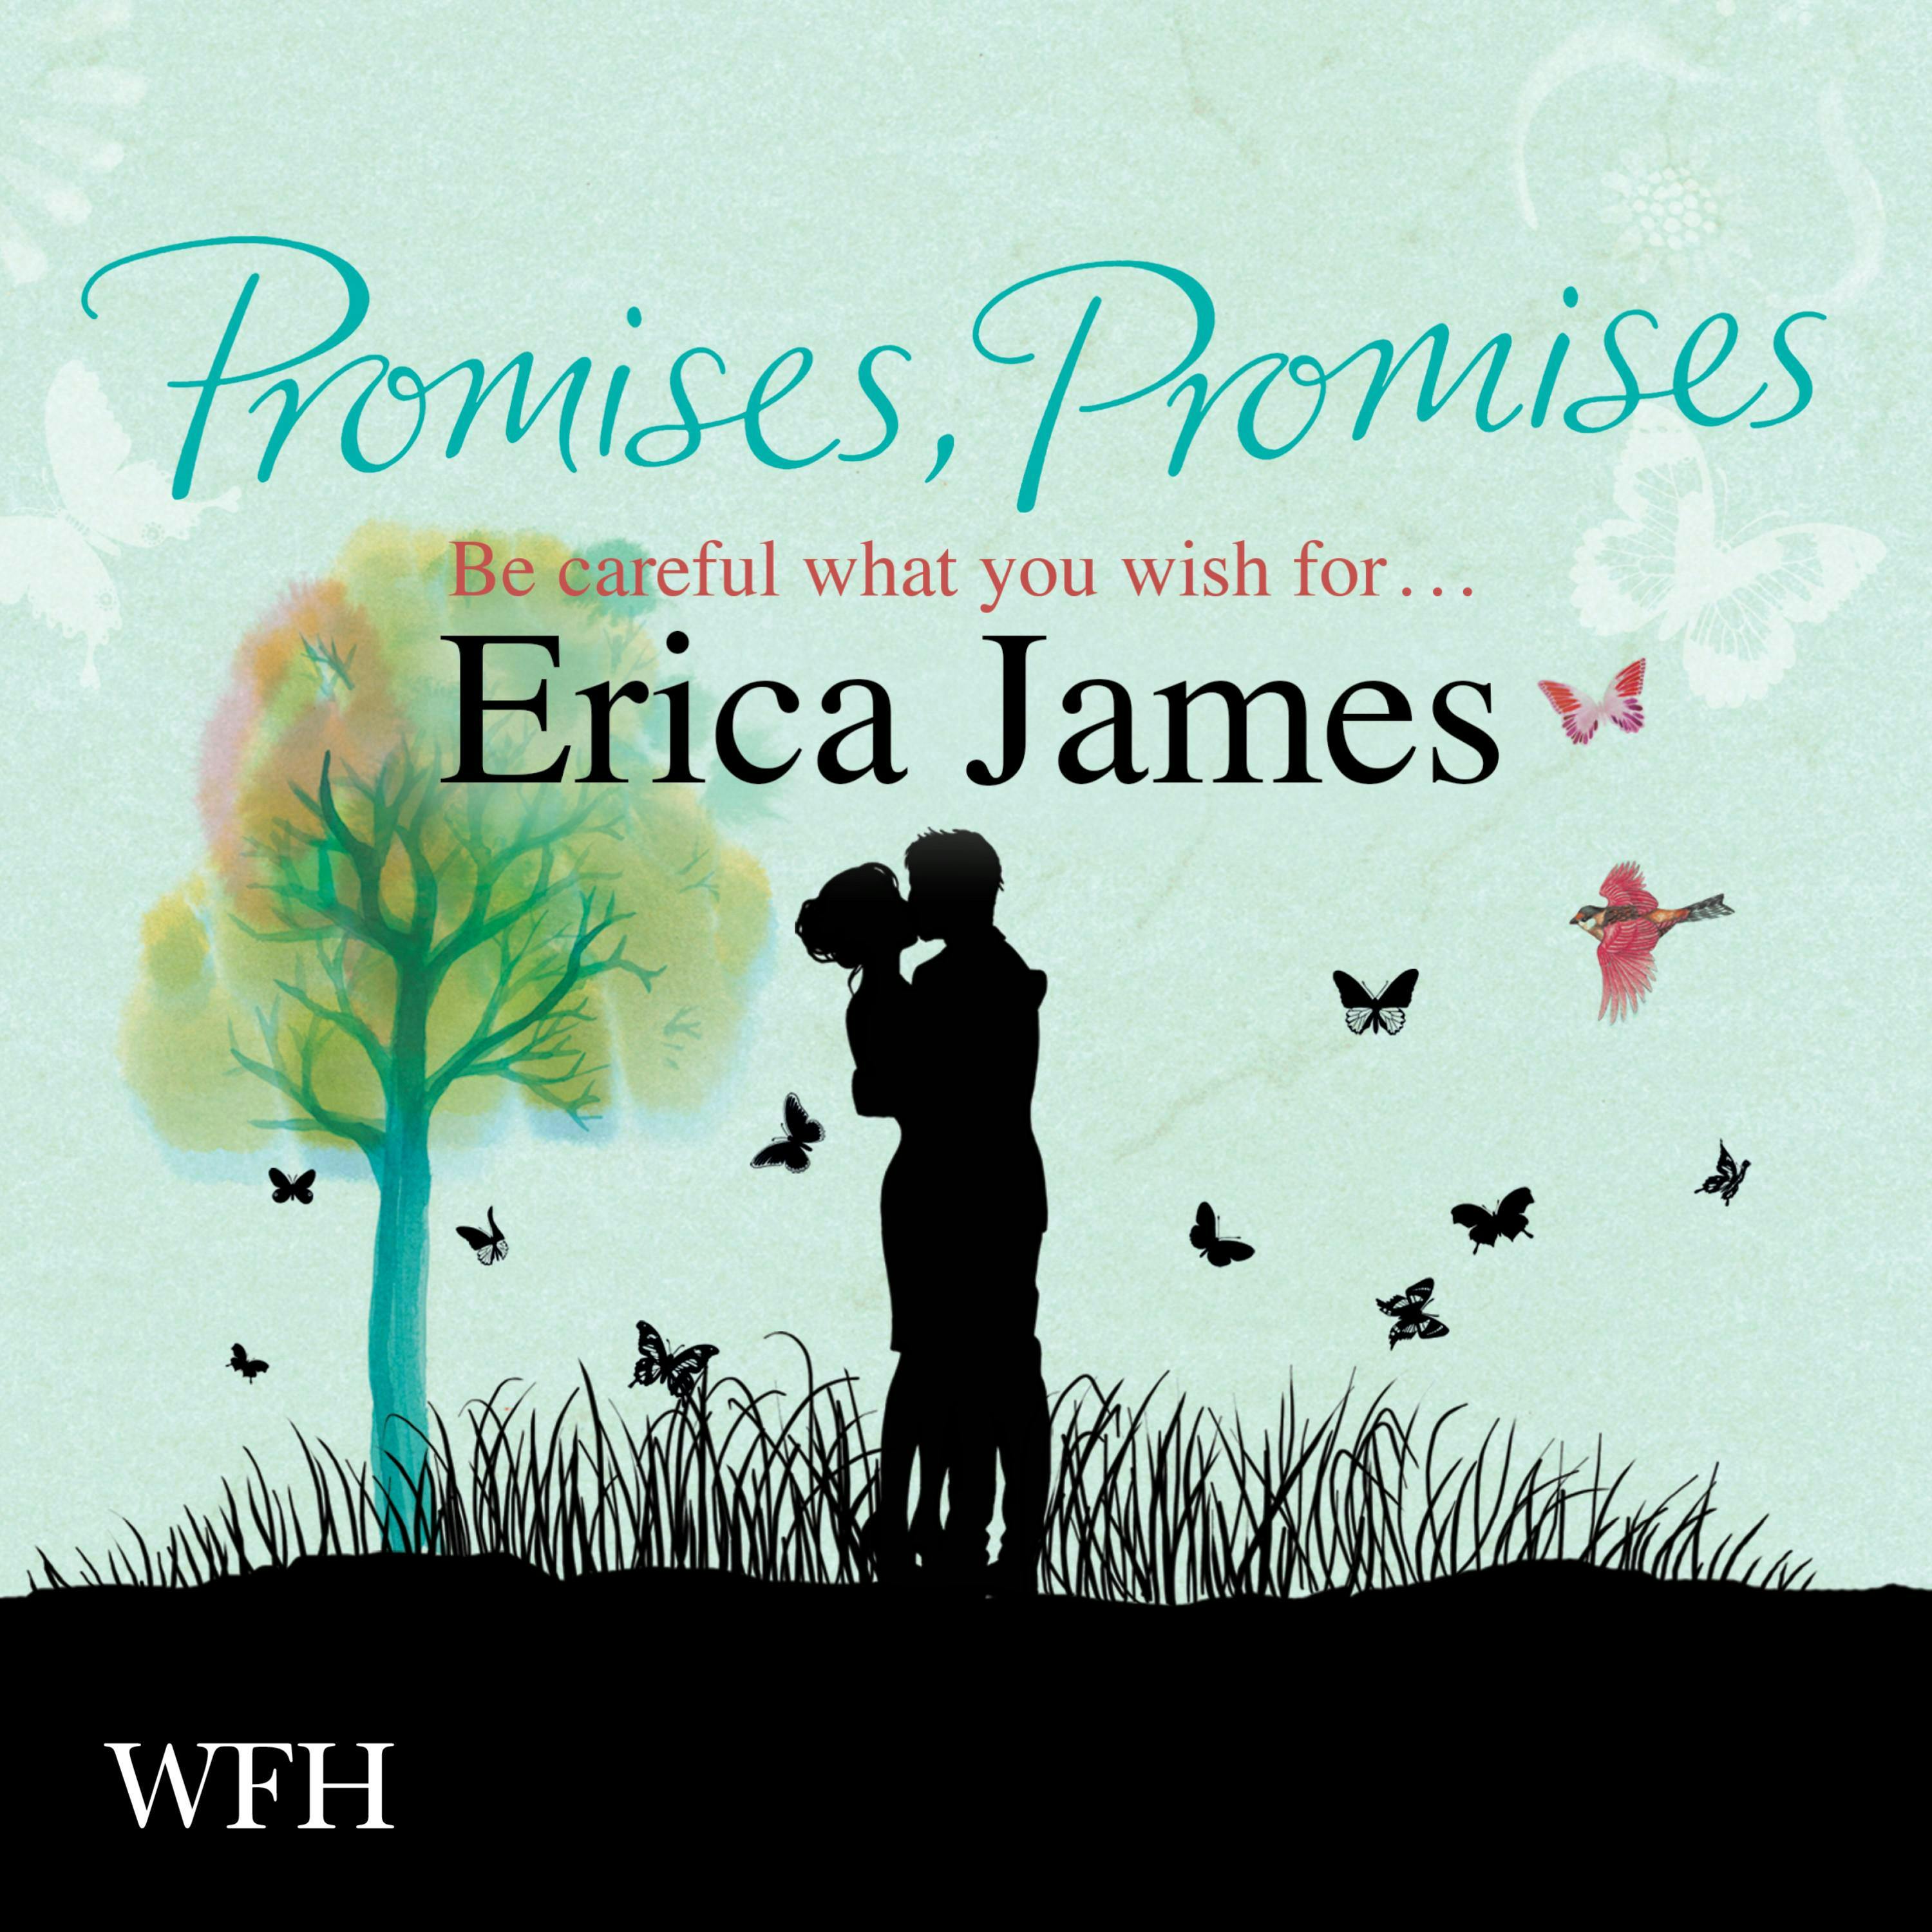 Promises, Promises - undefined